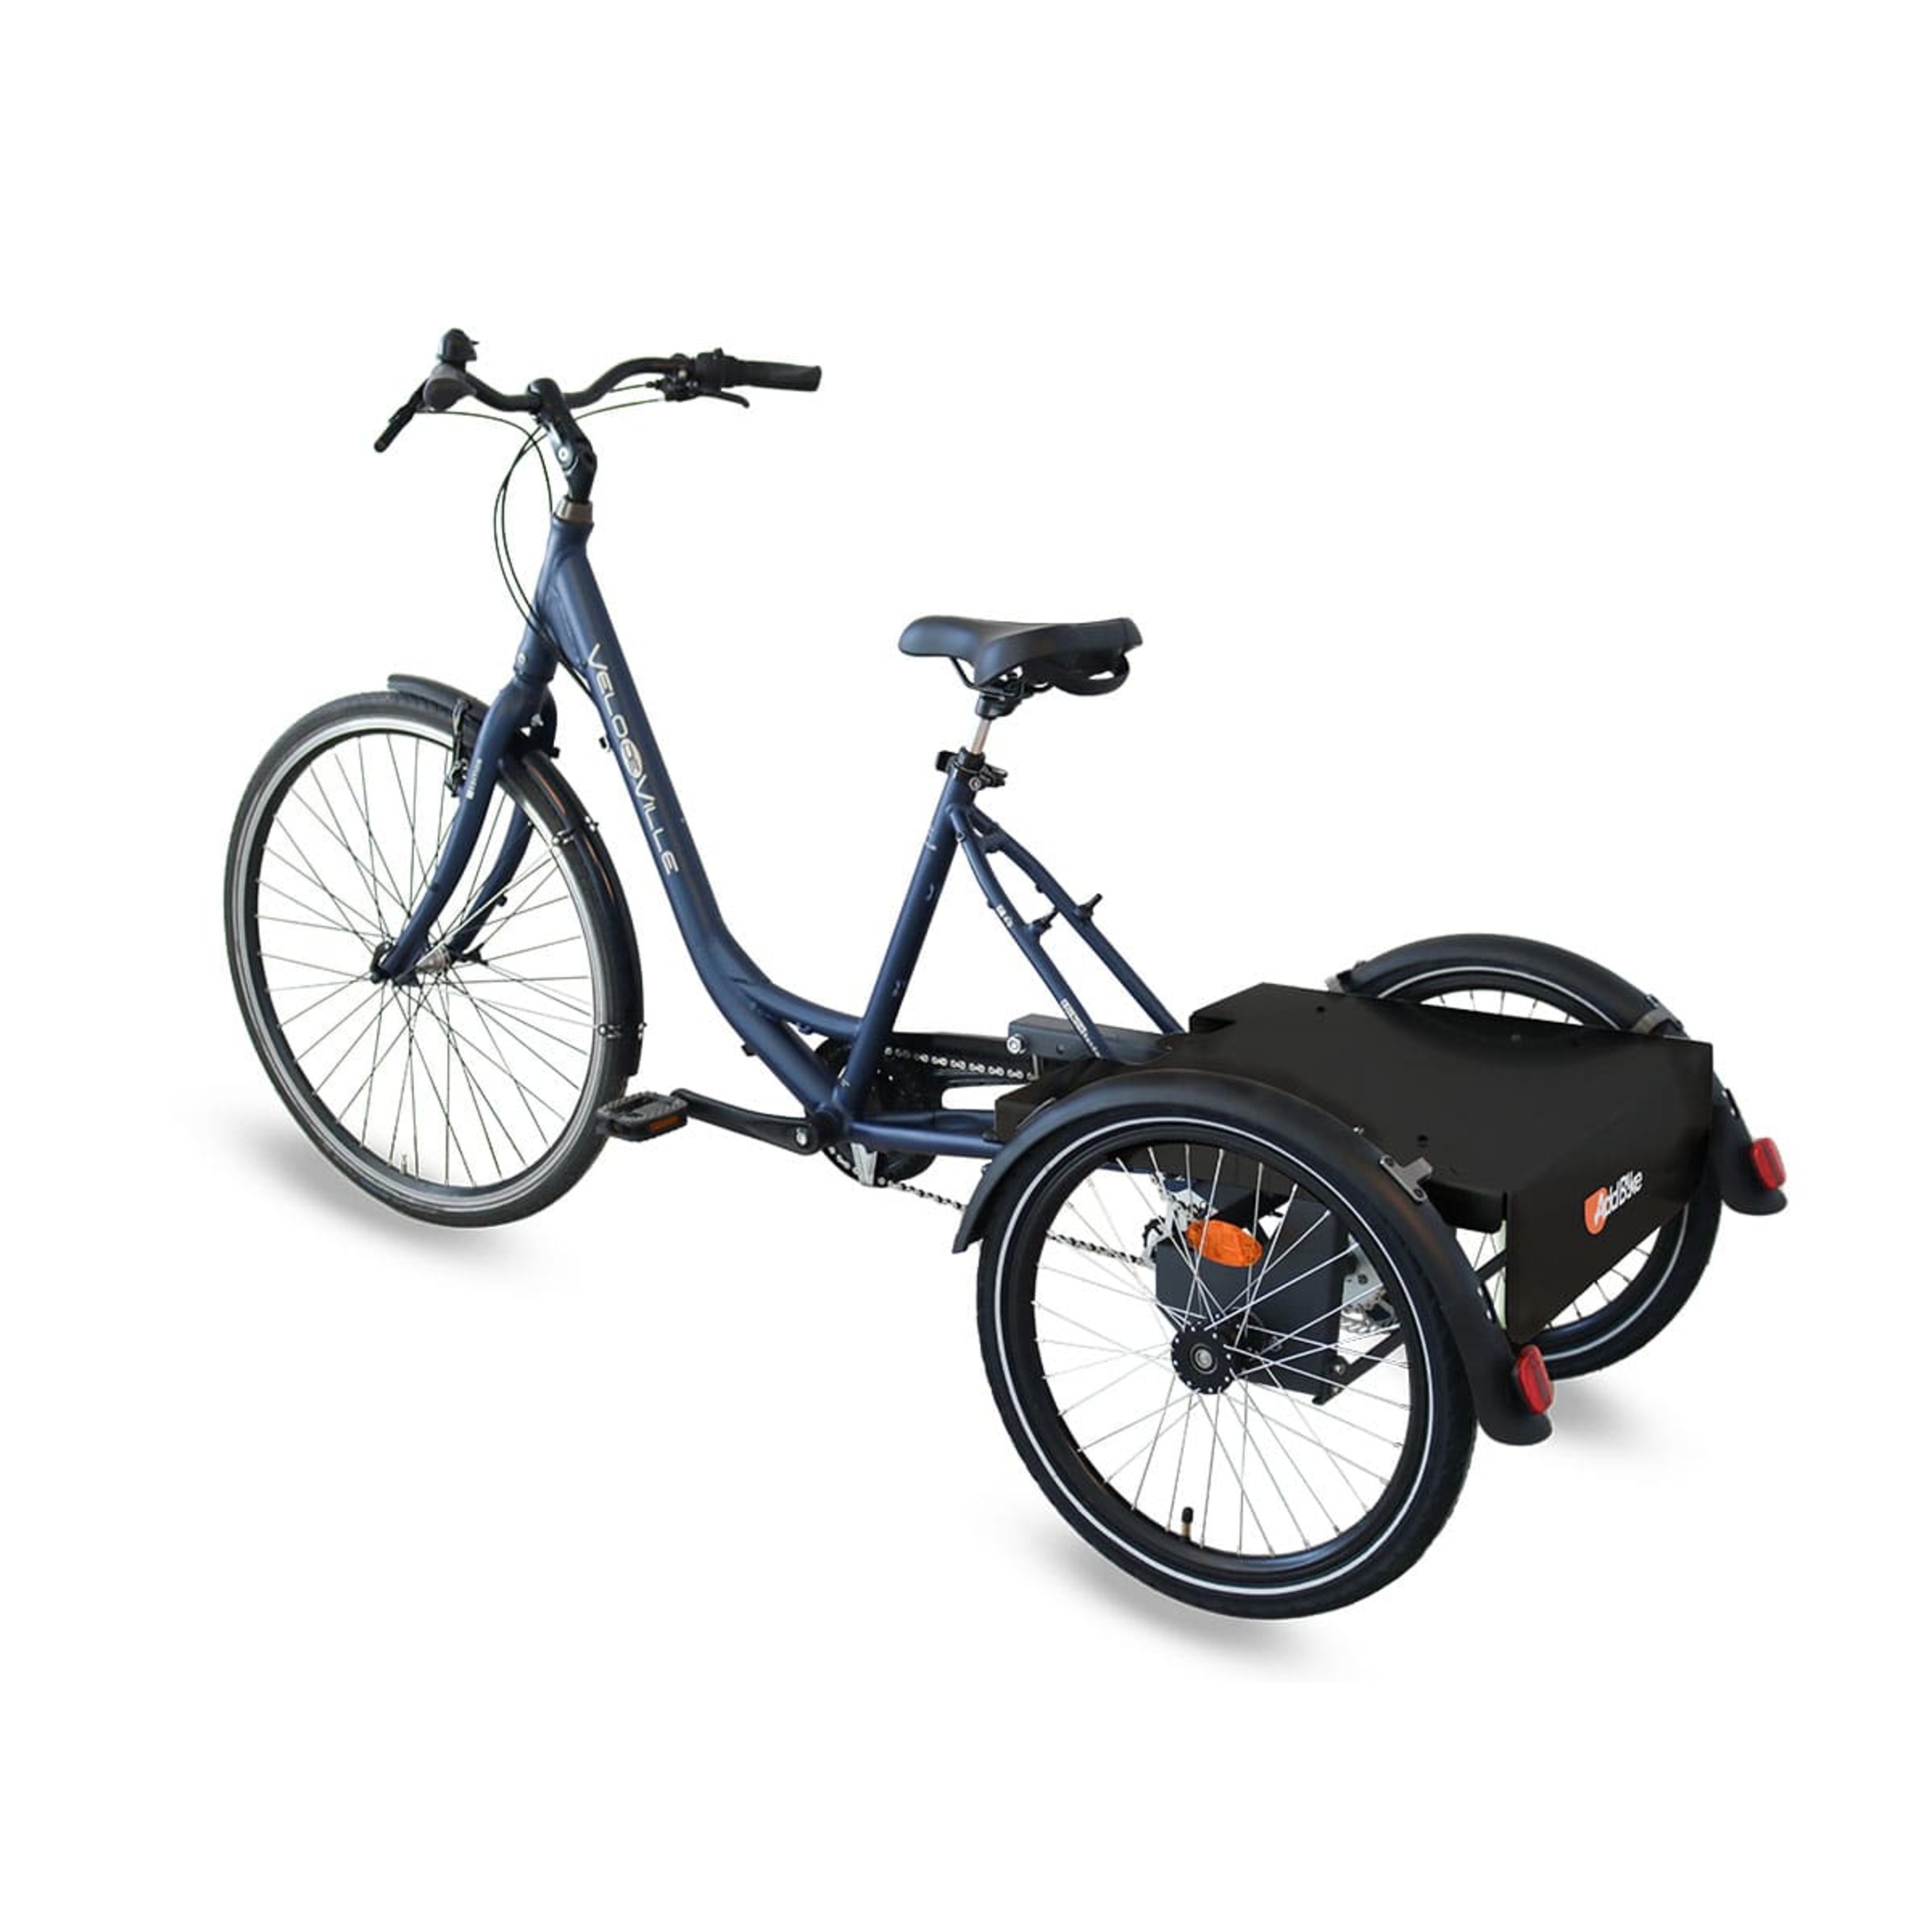 Kit Remolque Trasero Para Bicicleta  - Addbike B-back - gris - 